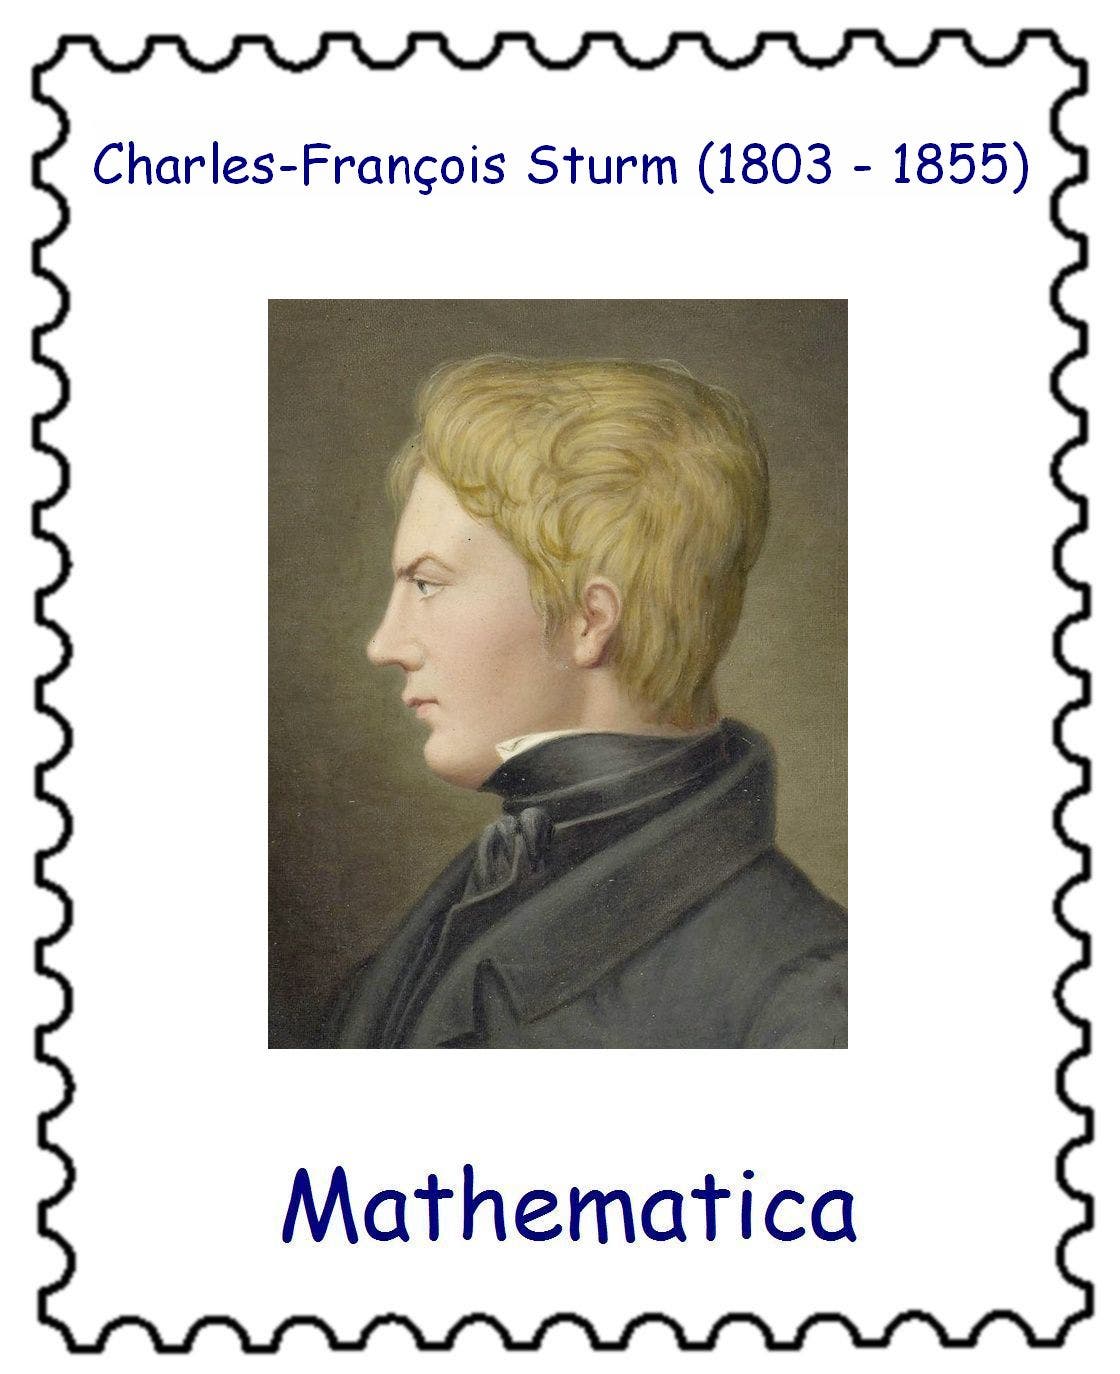 Porträt von Charles-François Sturm